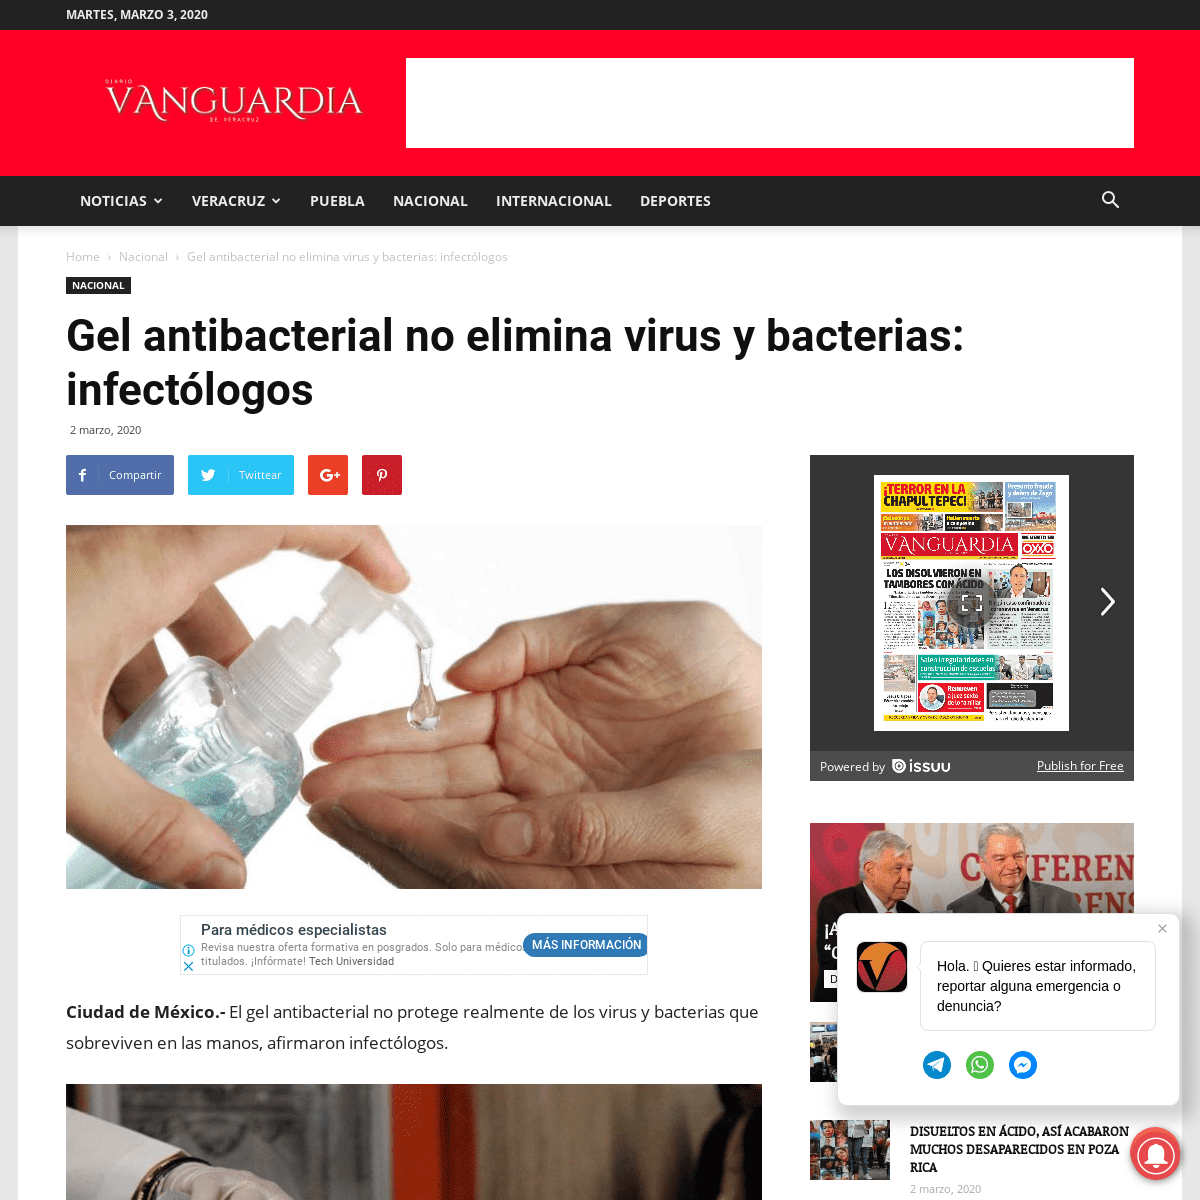 A complete backup of www.vanguardiaveracruz.mx/gel-antibacterial-no-elimina-virus-y-bacterias-infectologos/